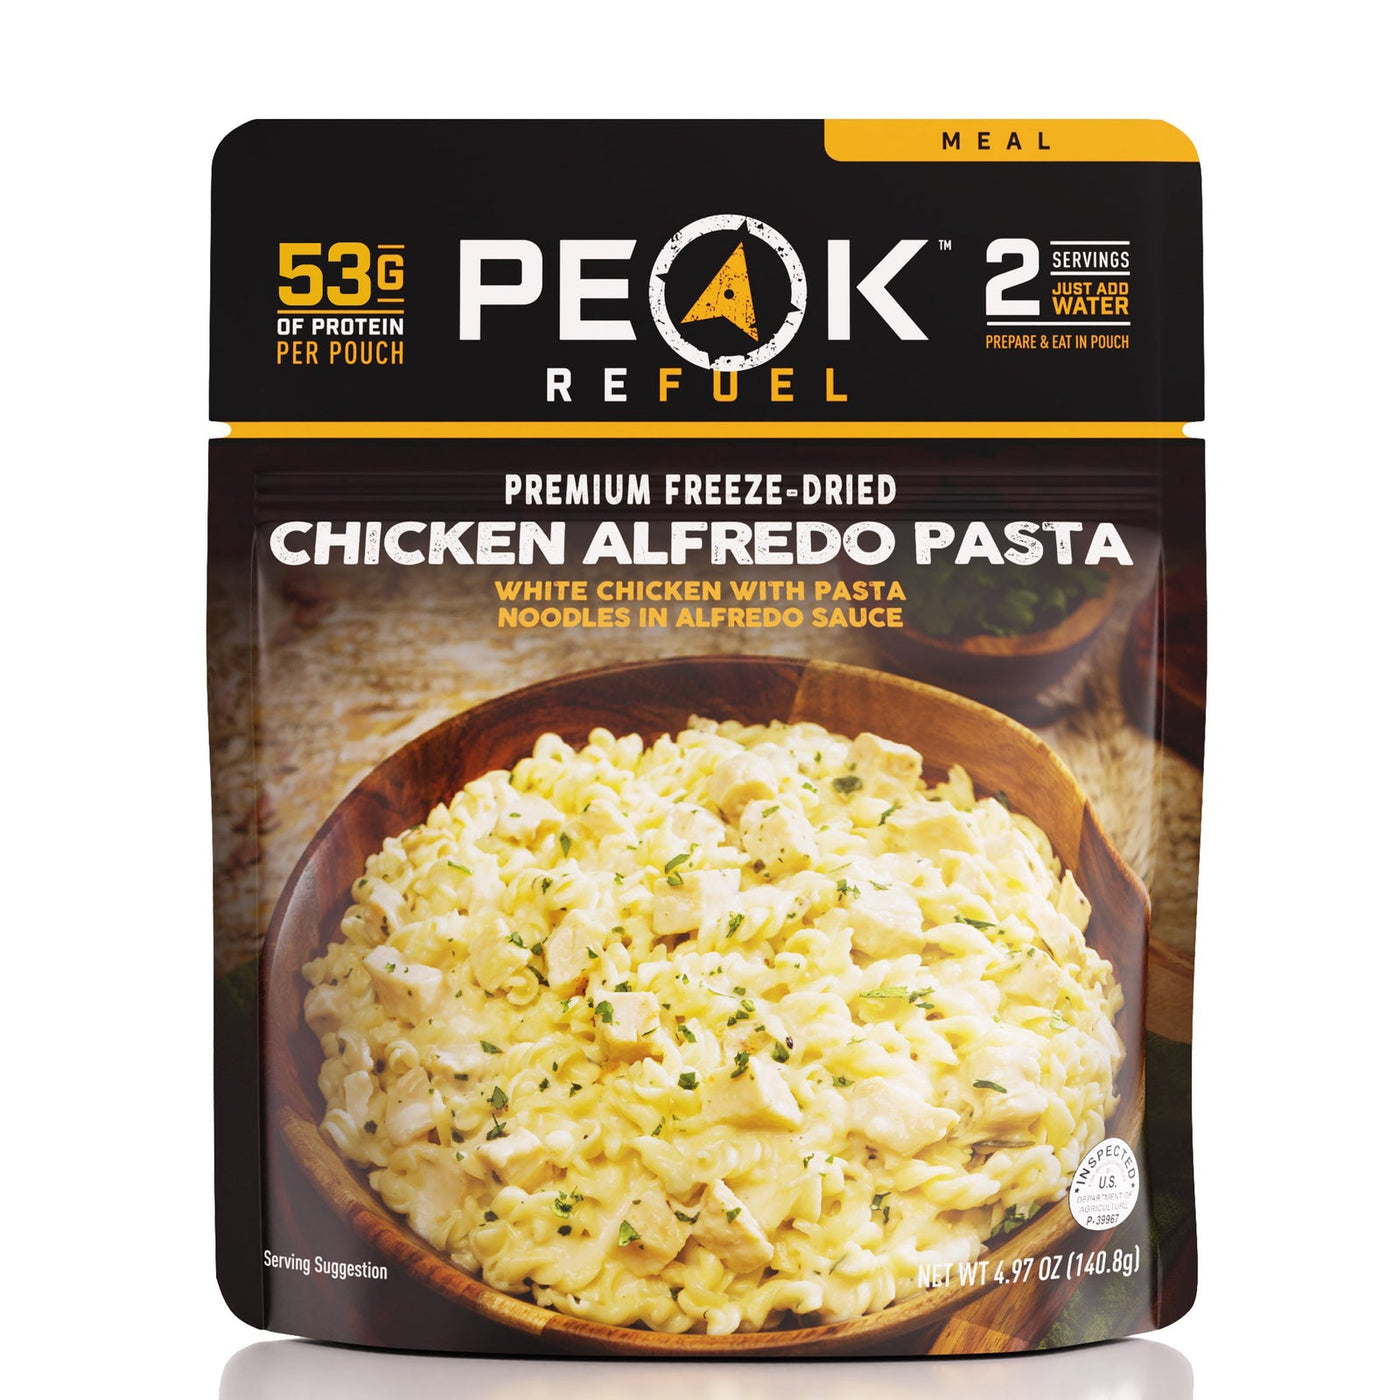 Peak Refuel, Chicken Alfredo Pasta Meal